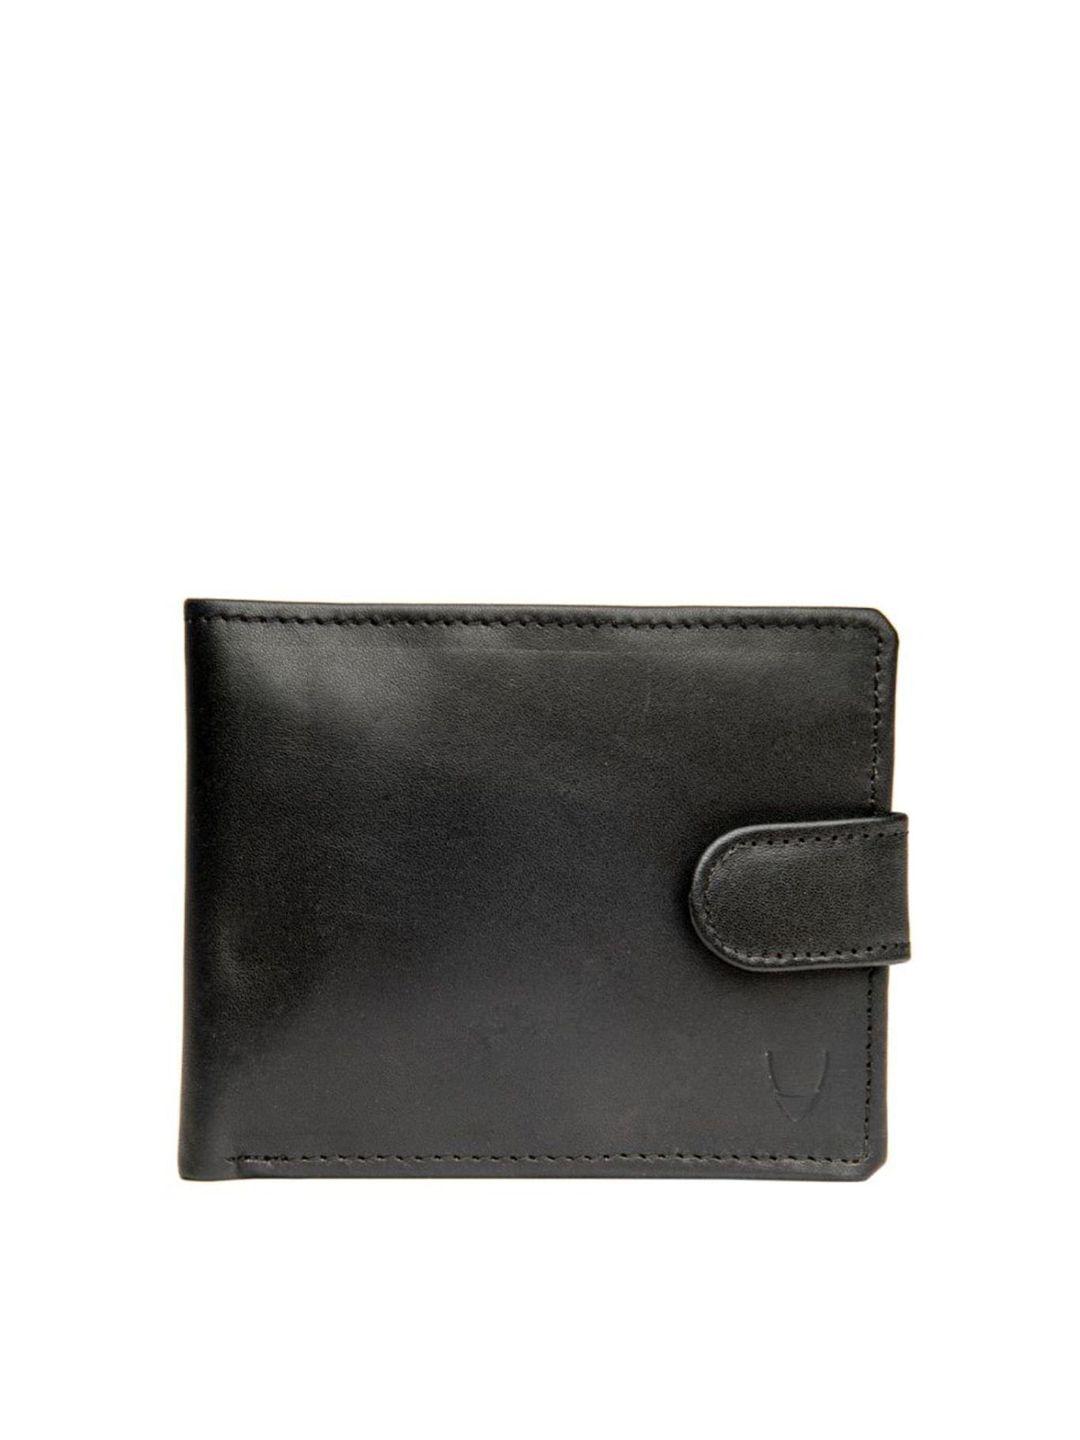 hidesign men black leather three fold wallet